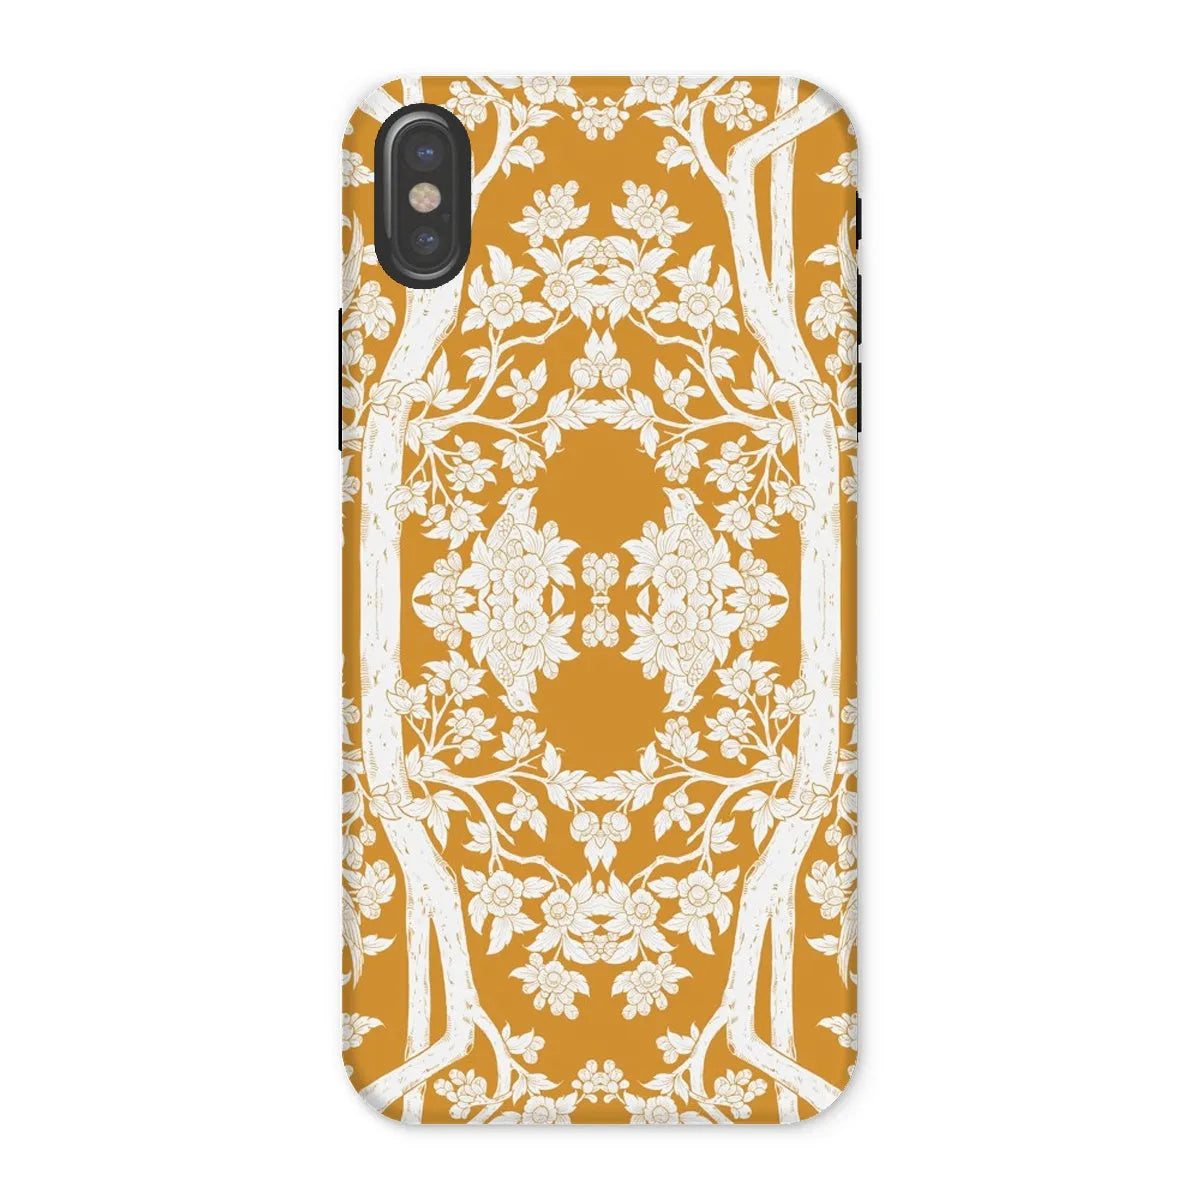 Aviary Orange Aesthetic Pattern Art Phone Case - Iphone x / Matte - Mobile Phone Cases - Aesthetic Art